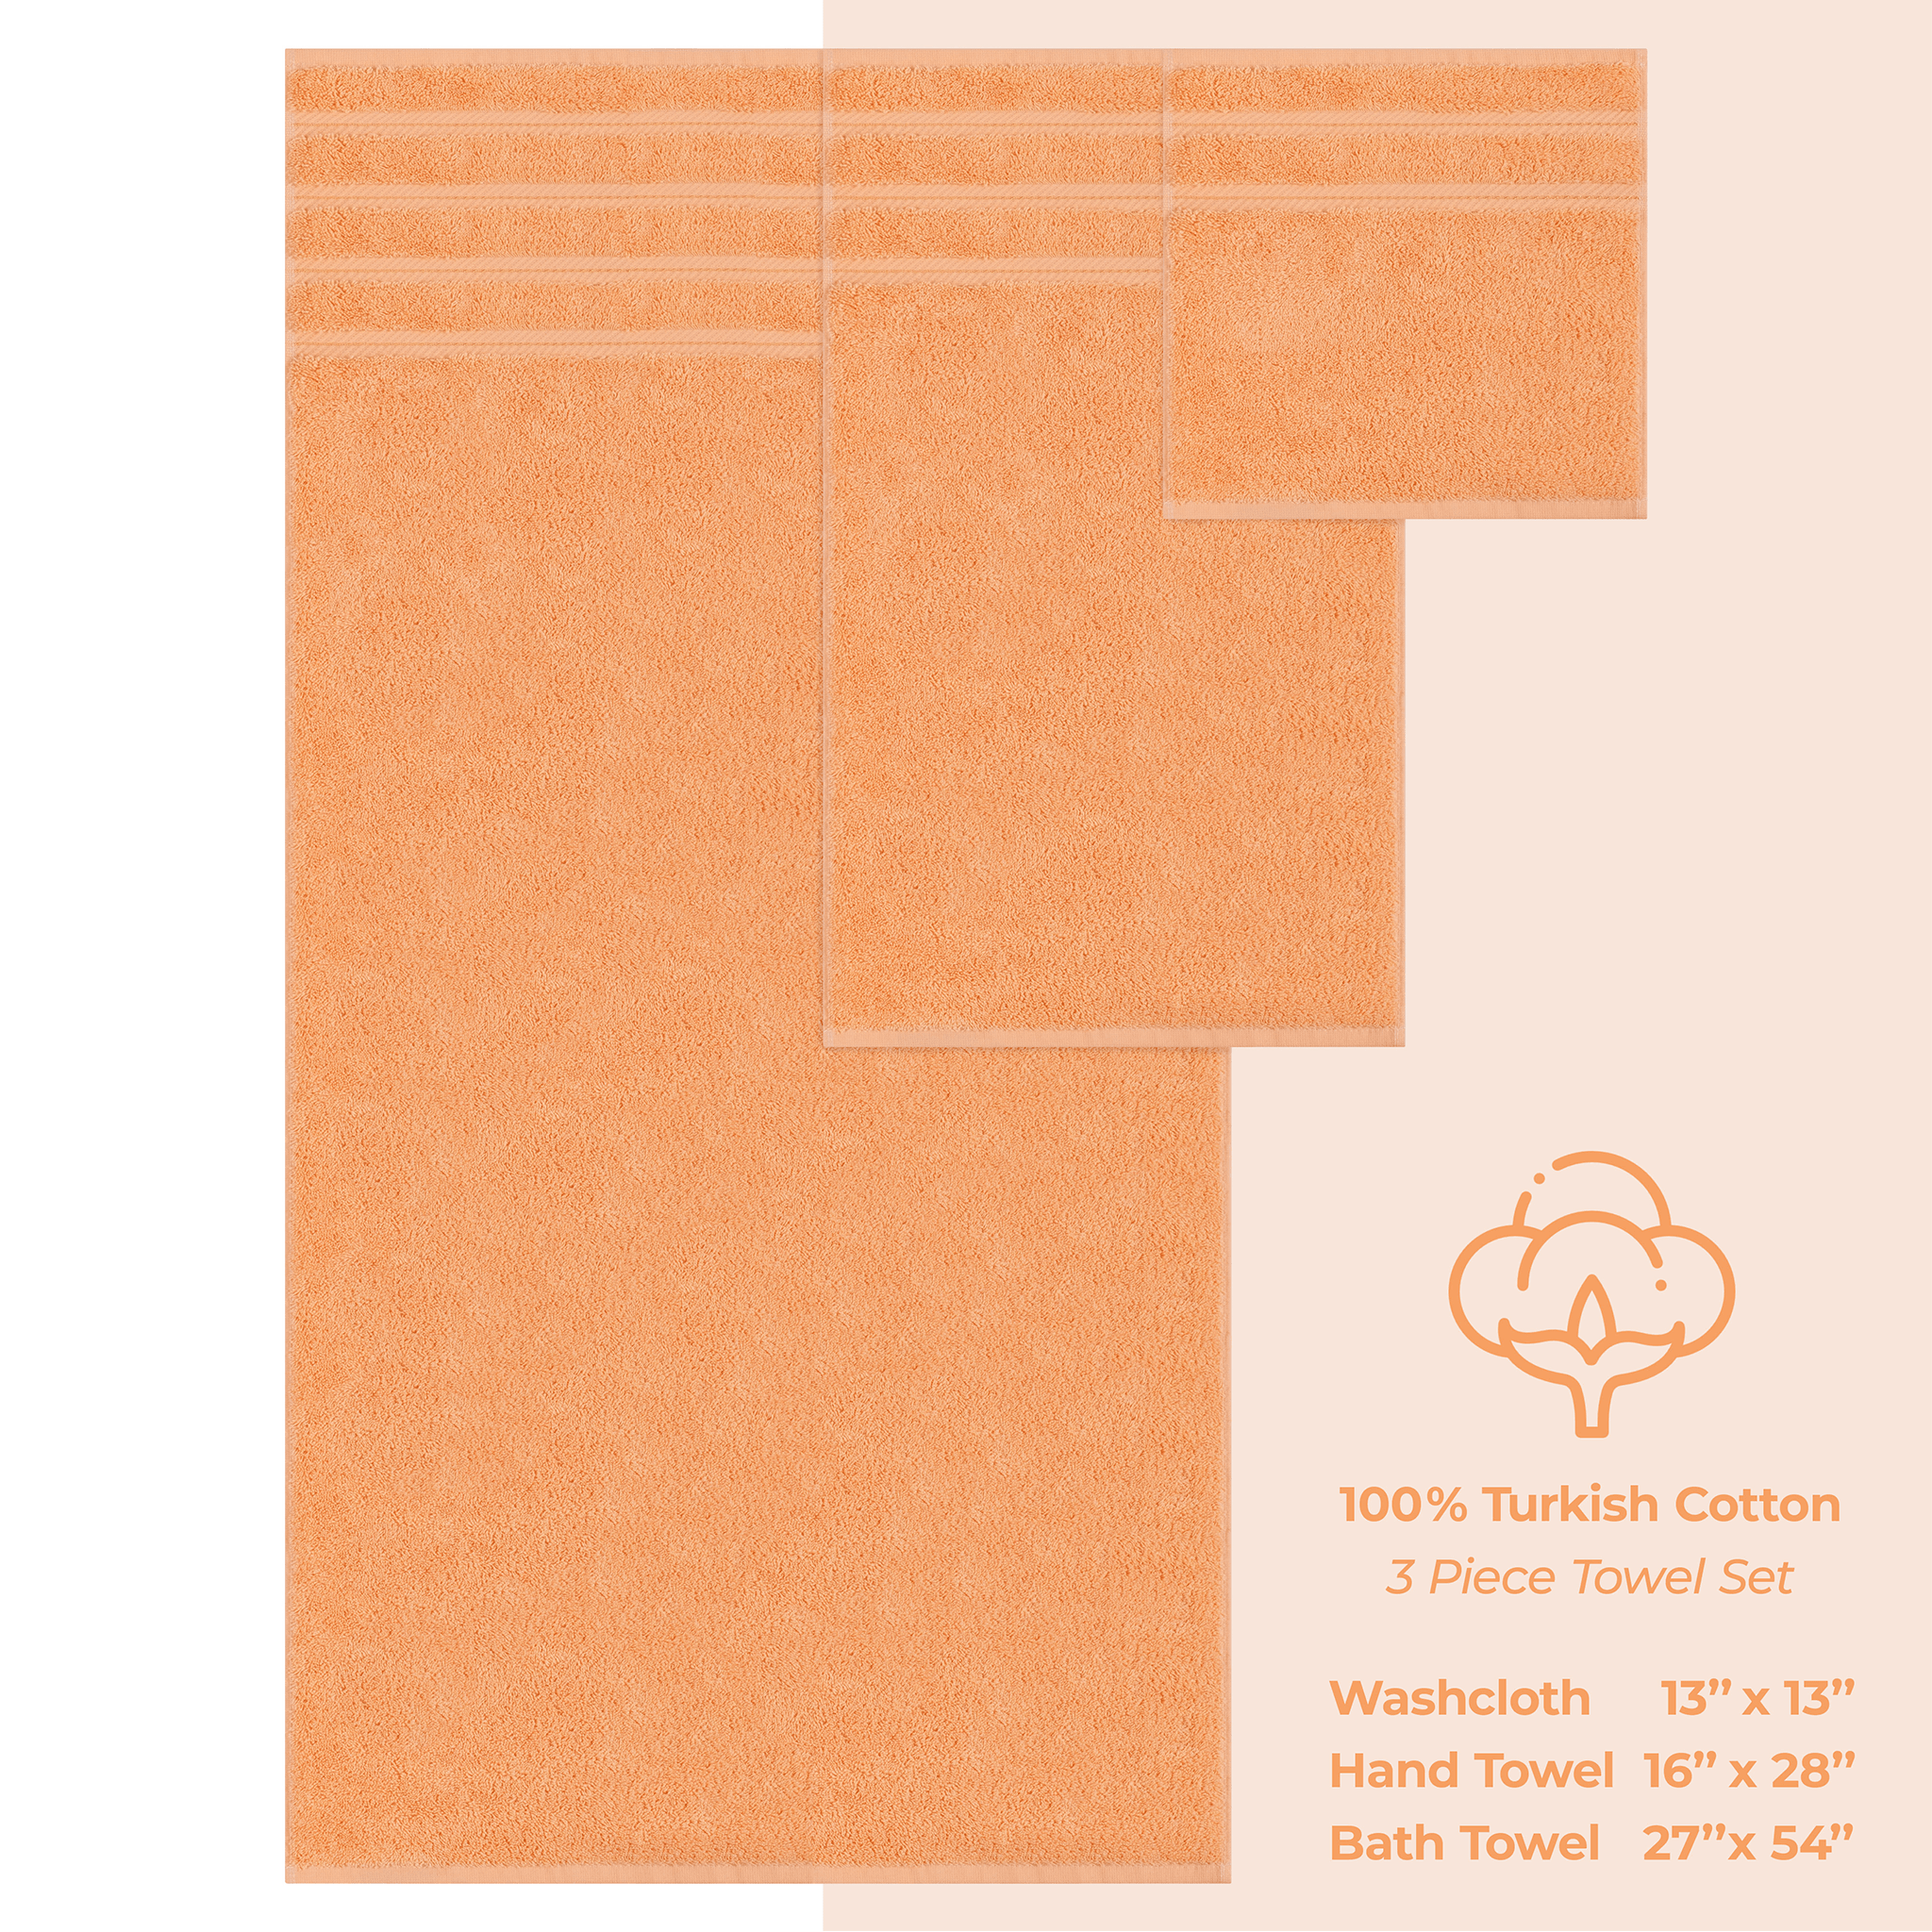 American Soft Linen - 3 Piece Turkish Cotton Towel Set - Malibu-Peach - 4